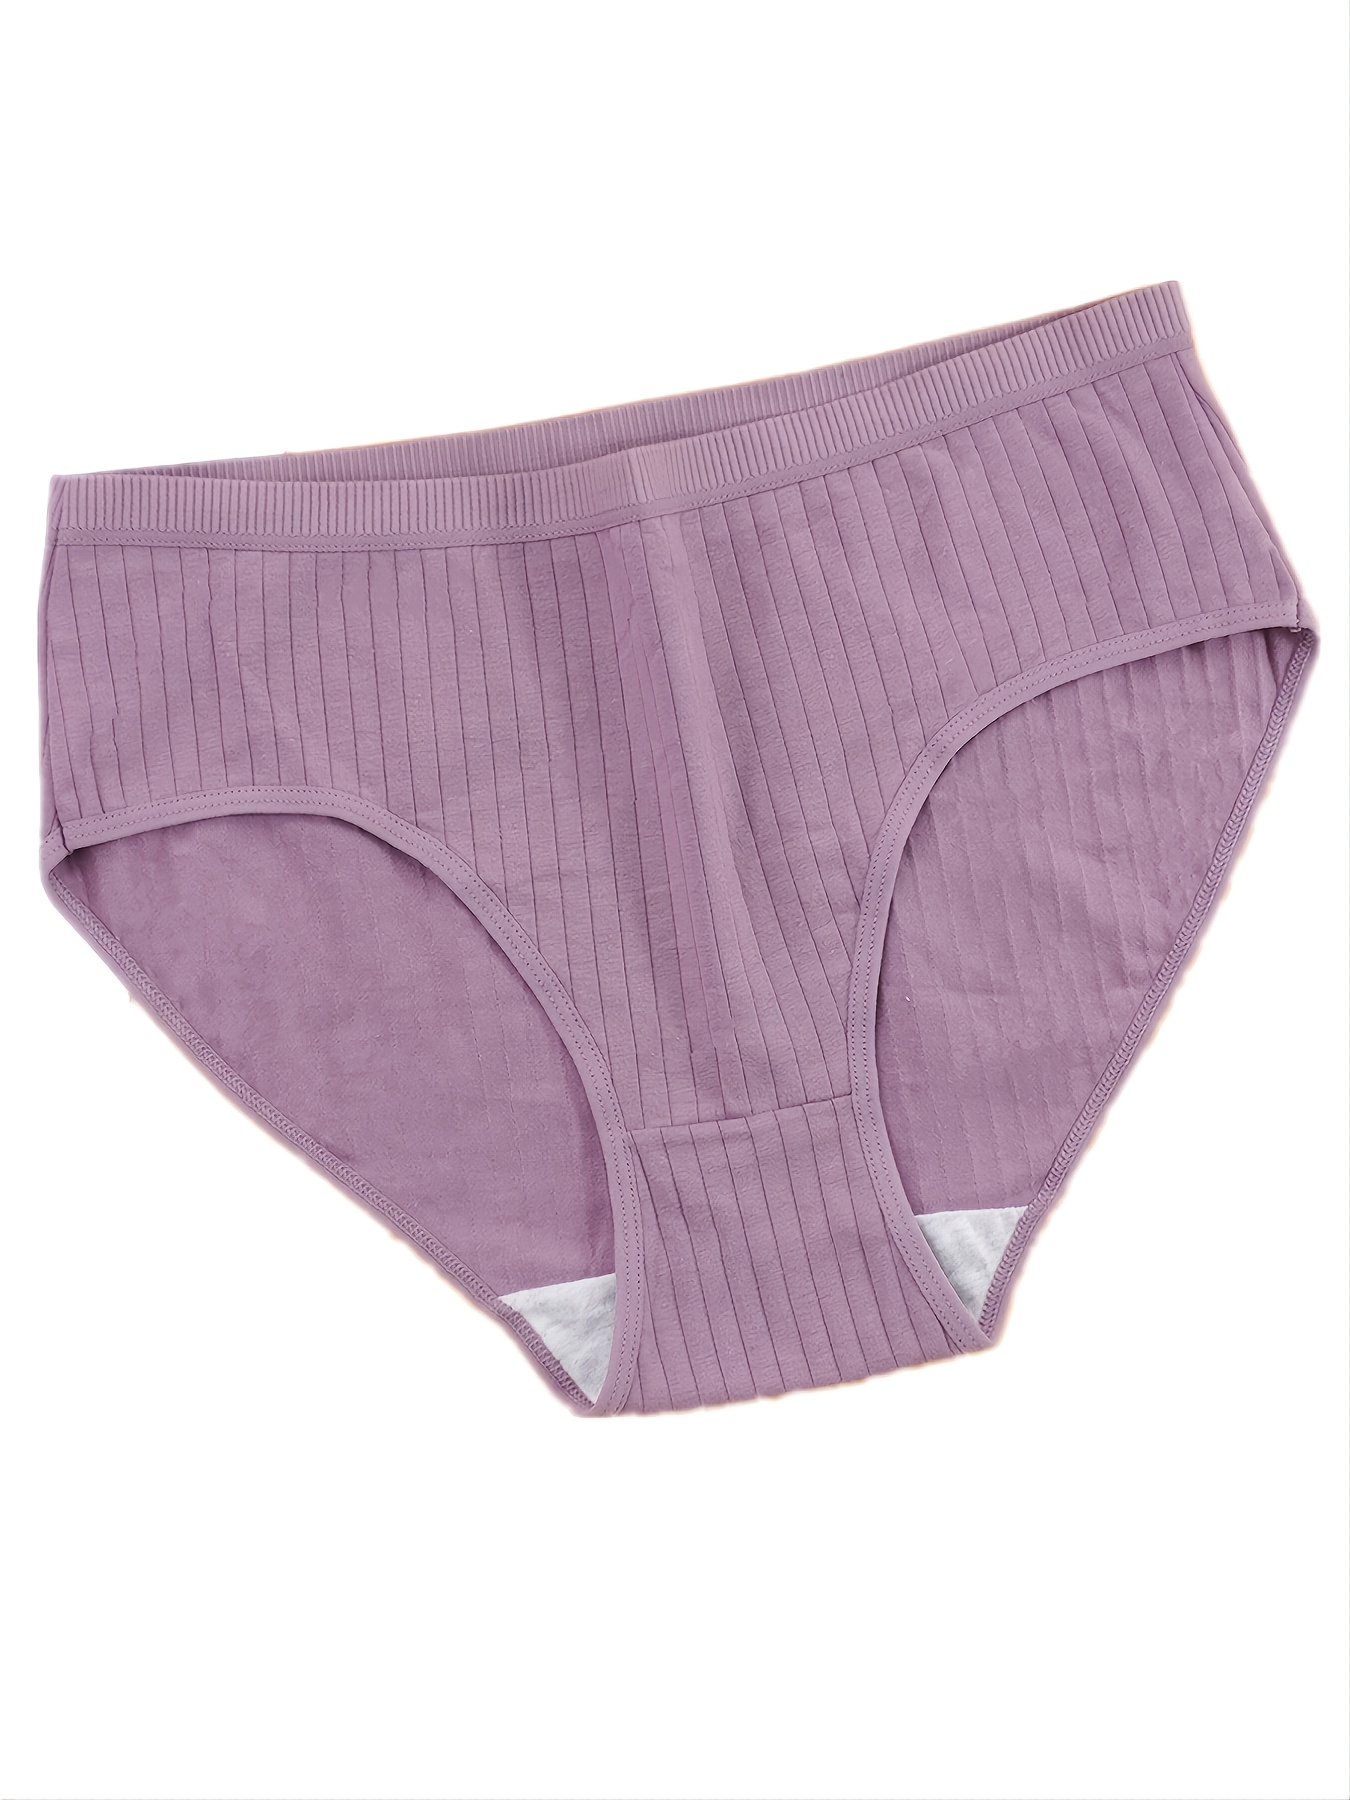  Purple - Women's Plus Panties / Women's Plus Intimates